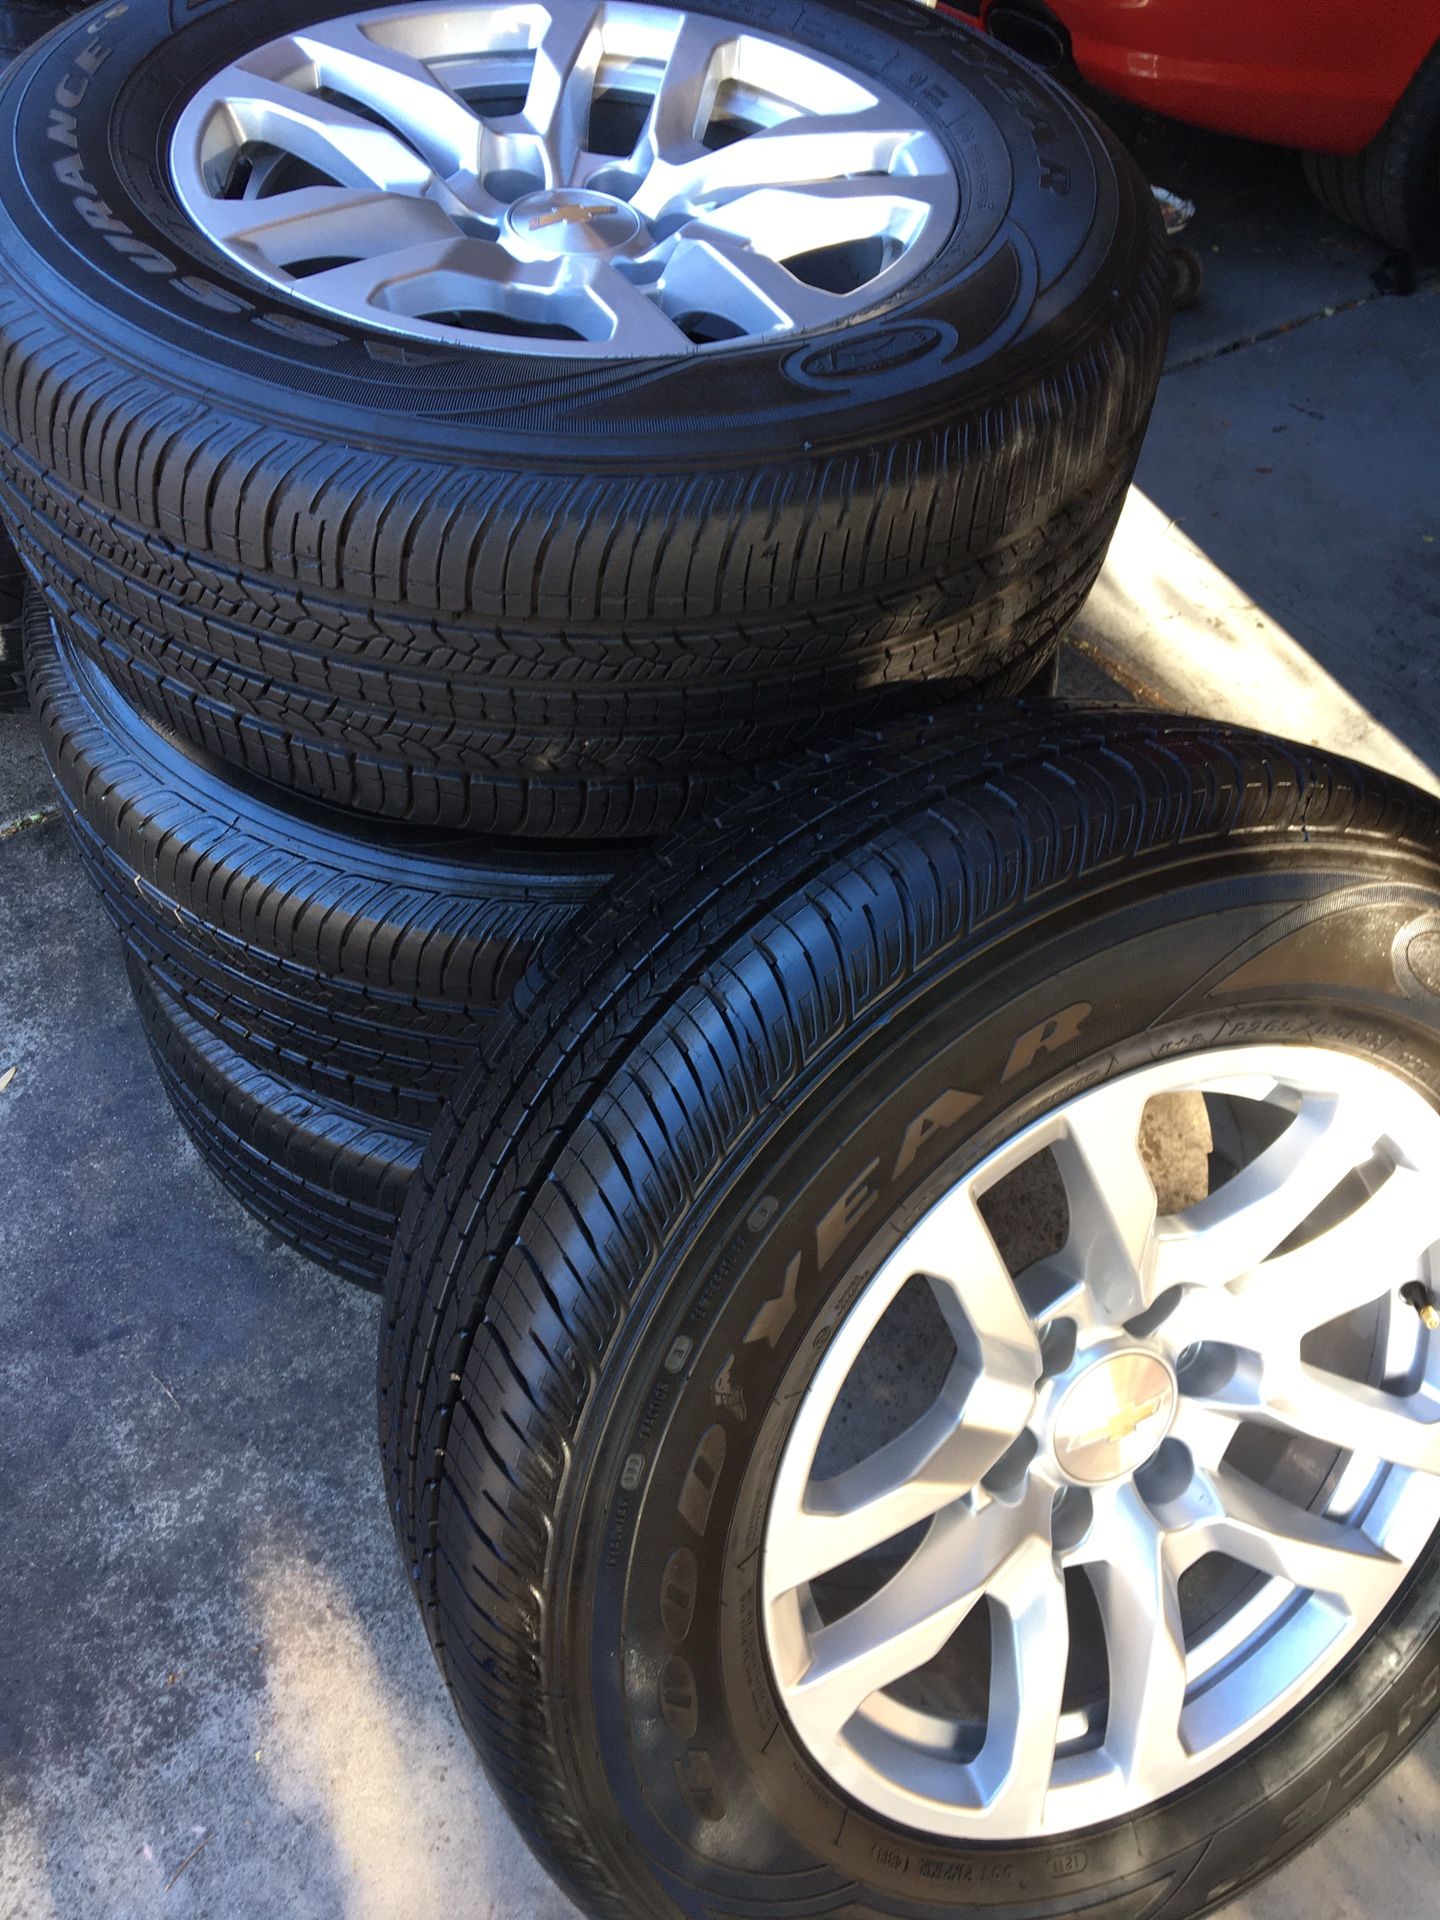 Chevy Silverado 18 inch wheels 2019 tahoe oem rims